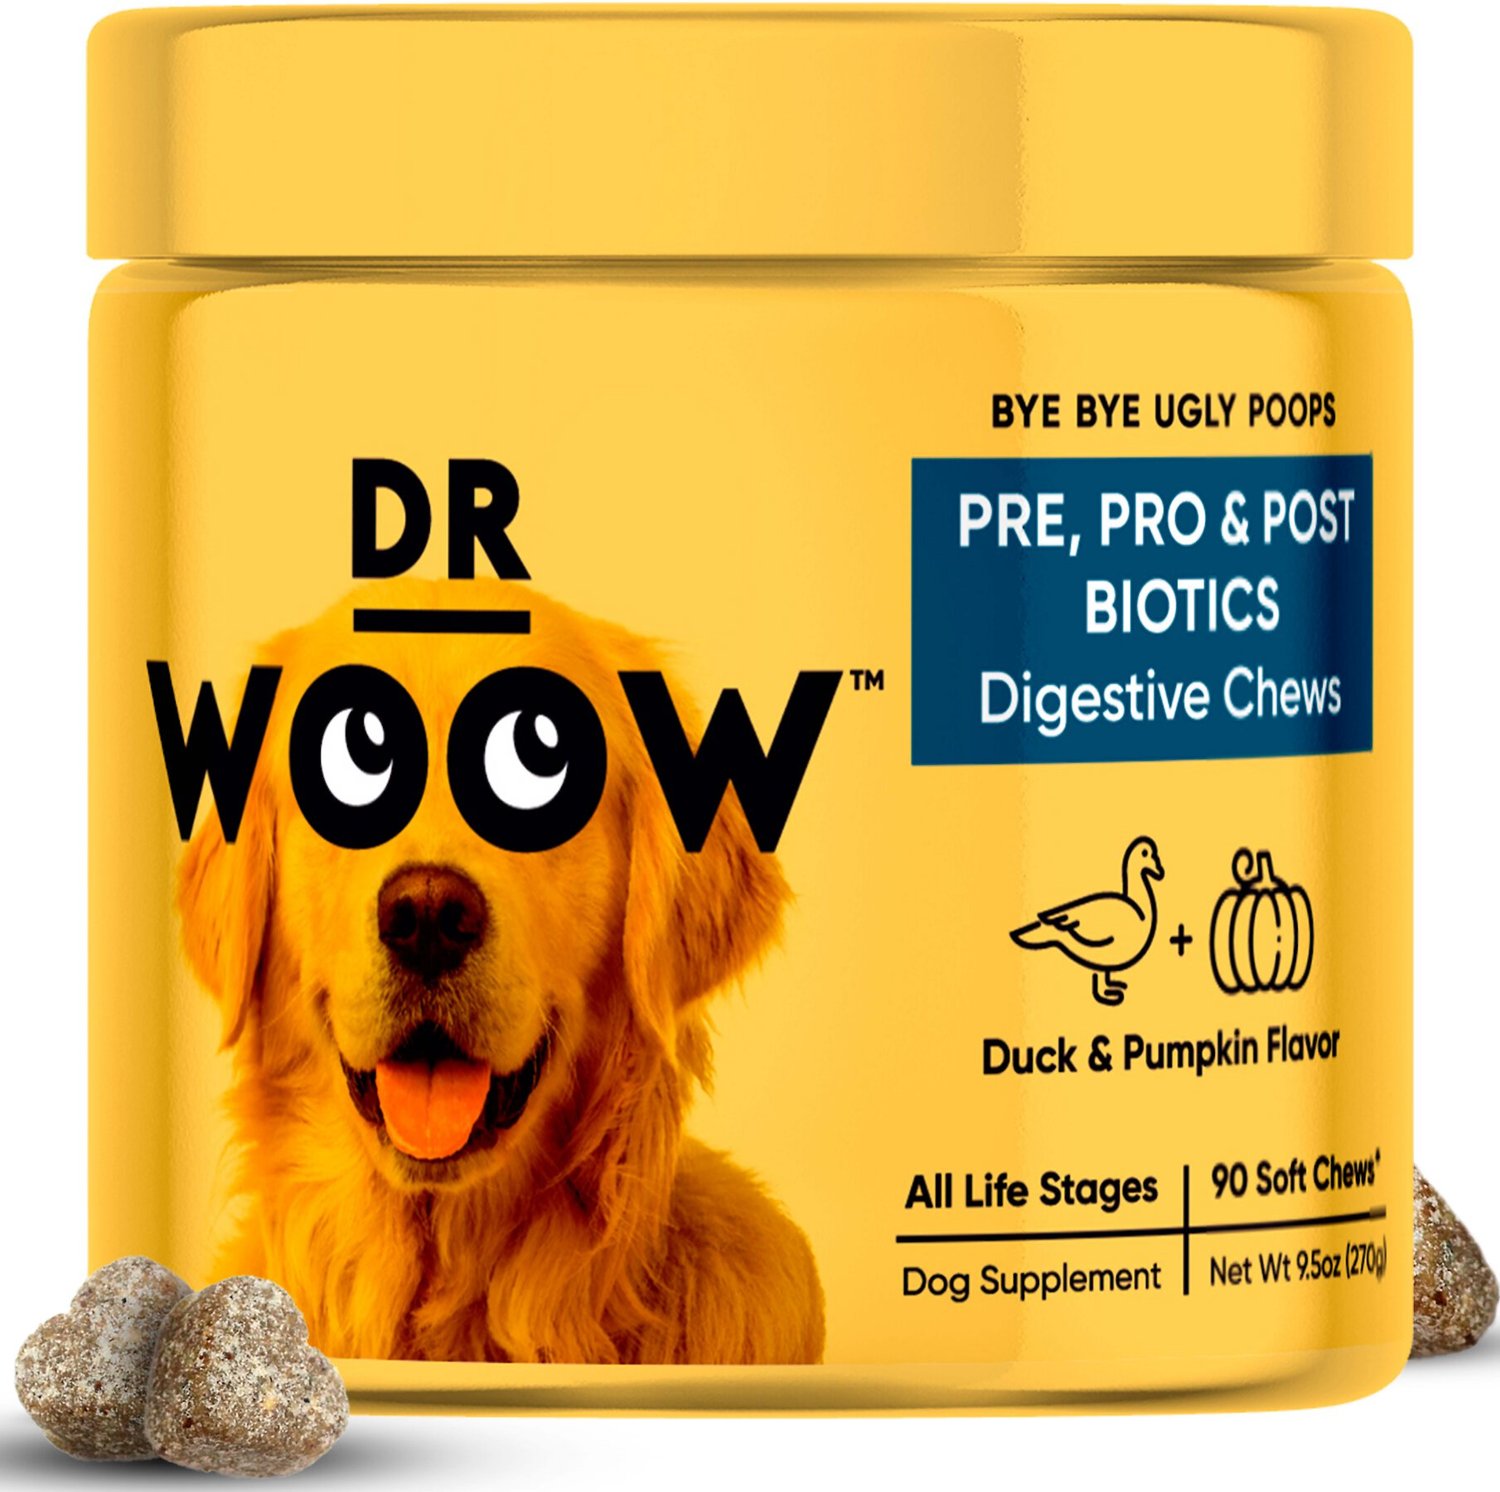 Dr Woow Pre, Pro & Post Biotics